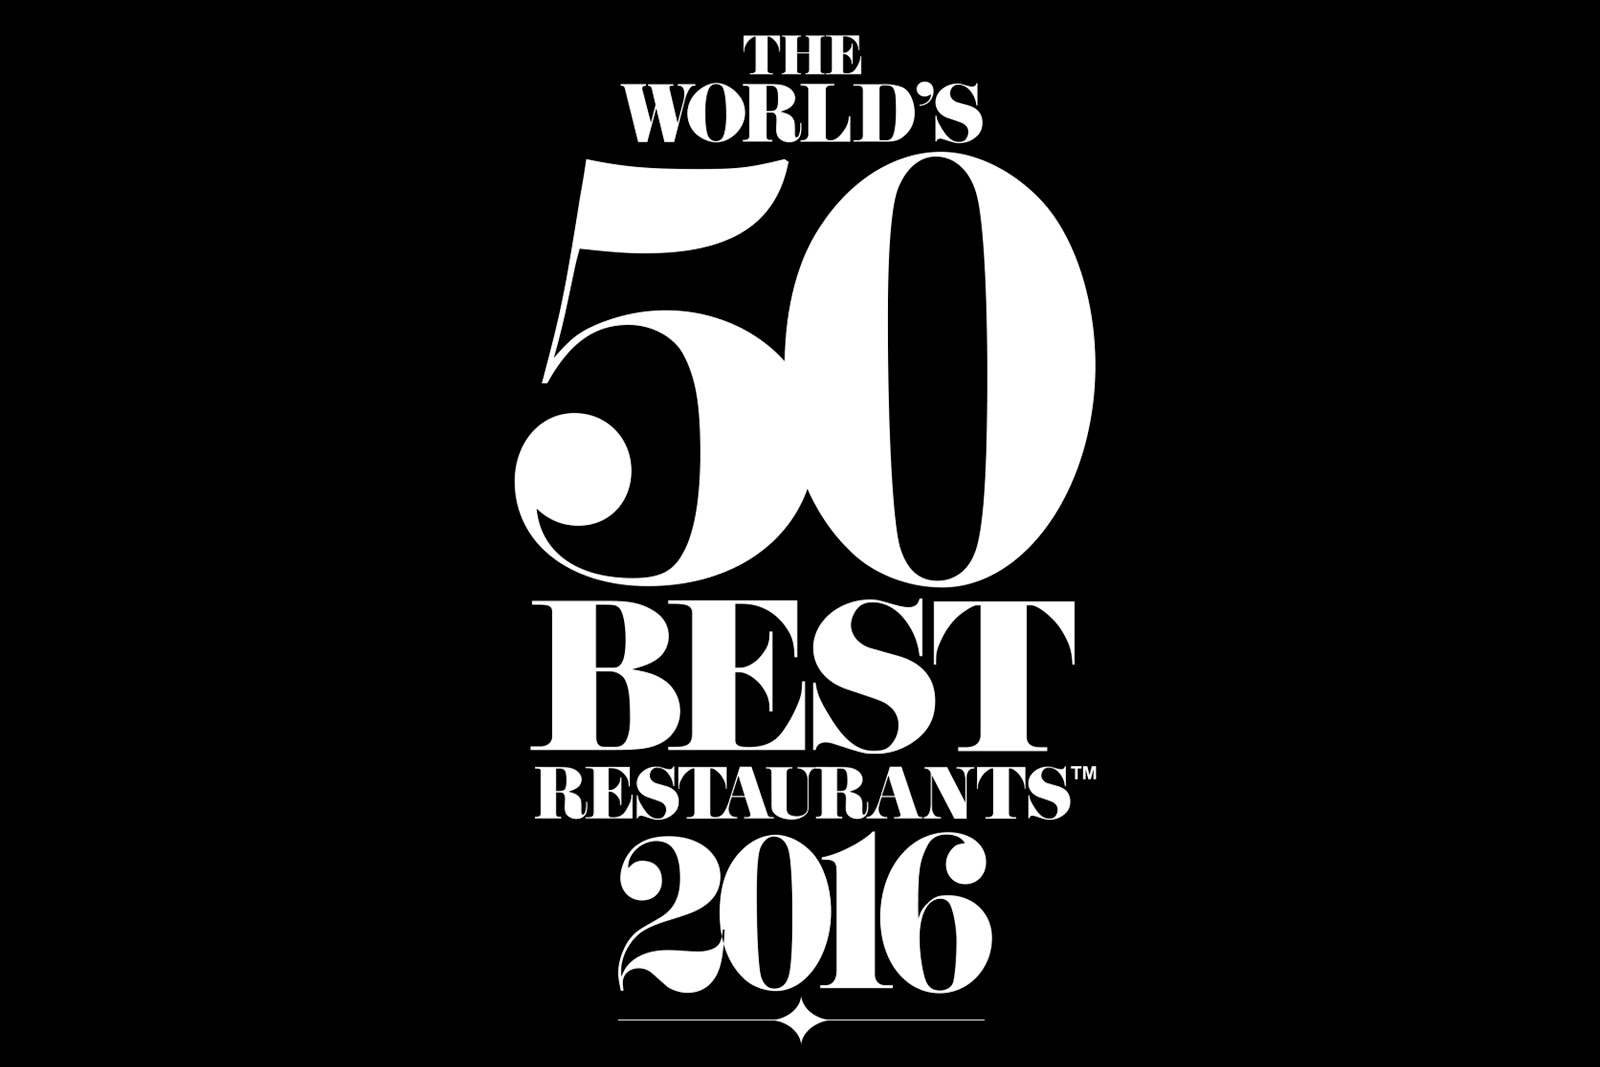 The World's 50 Best Restaurants 2016 list